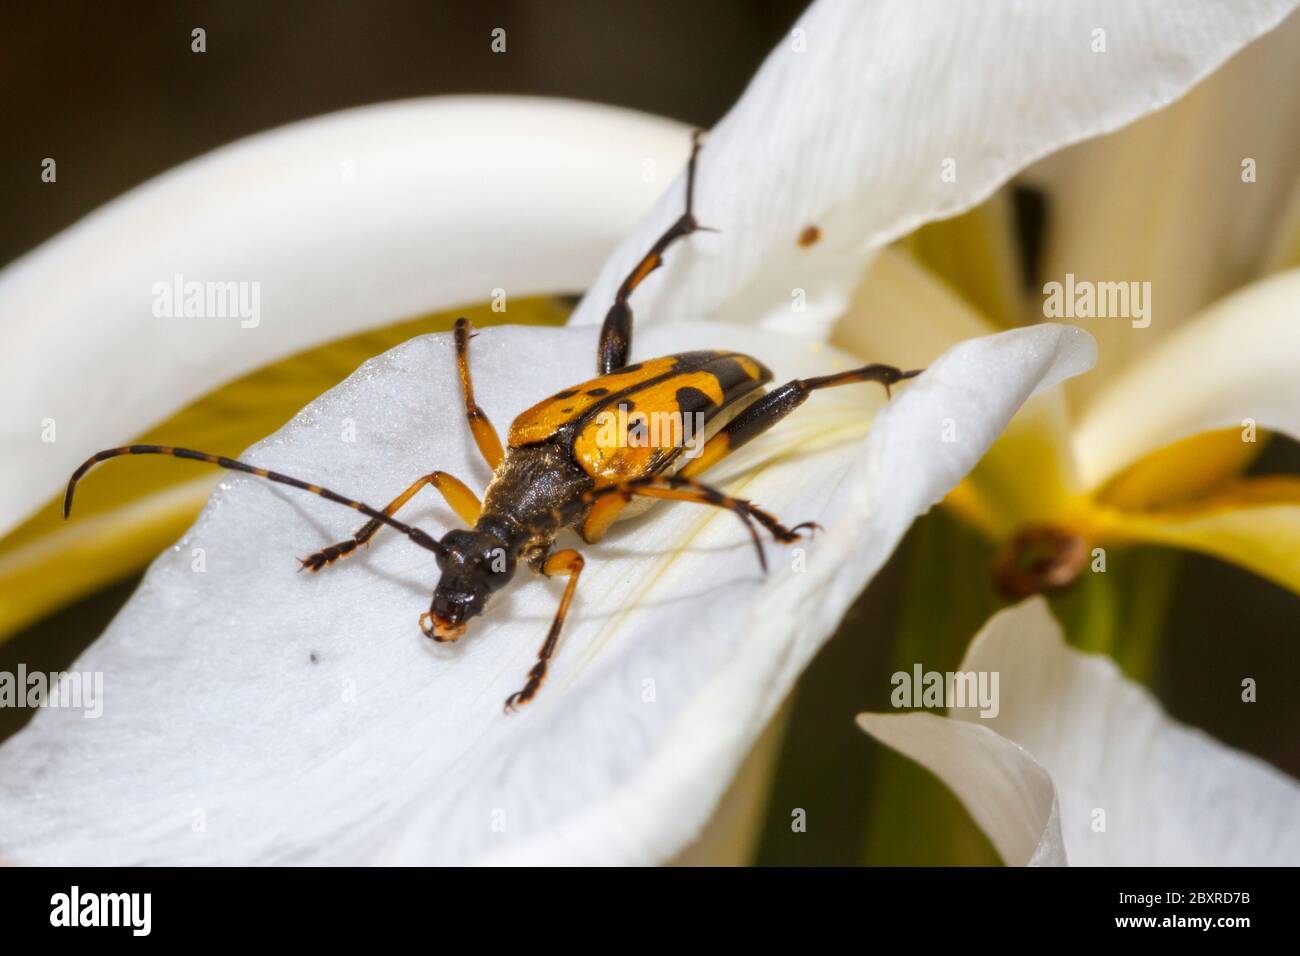 Black and yellow longhorn beetle (Rutpela maculata) on an Iris flower Stock Photo